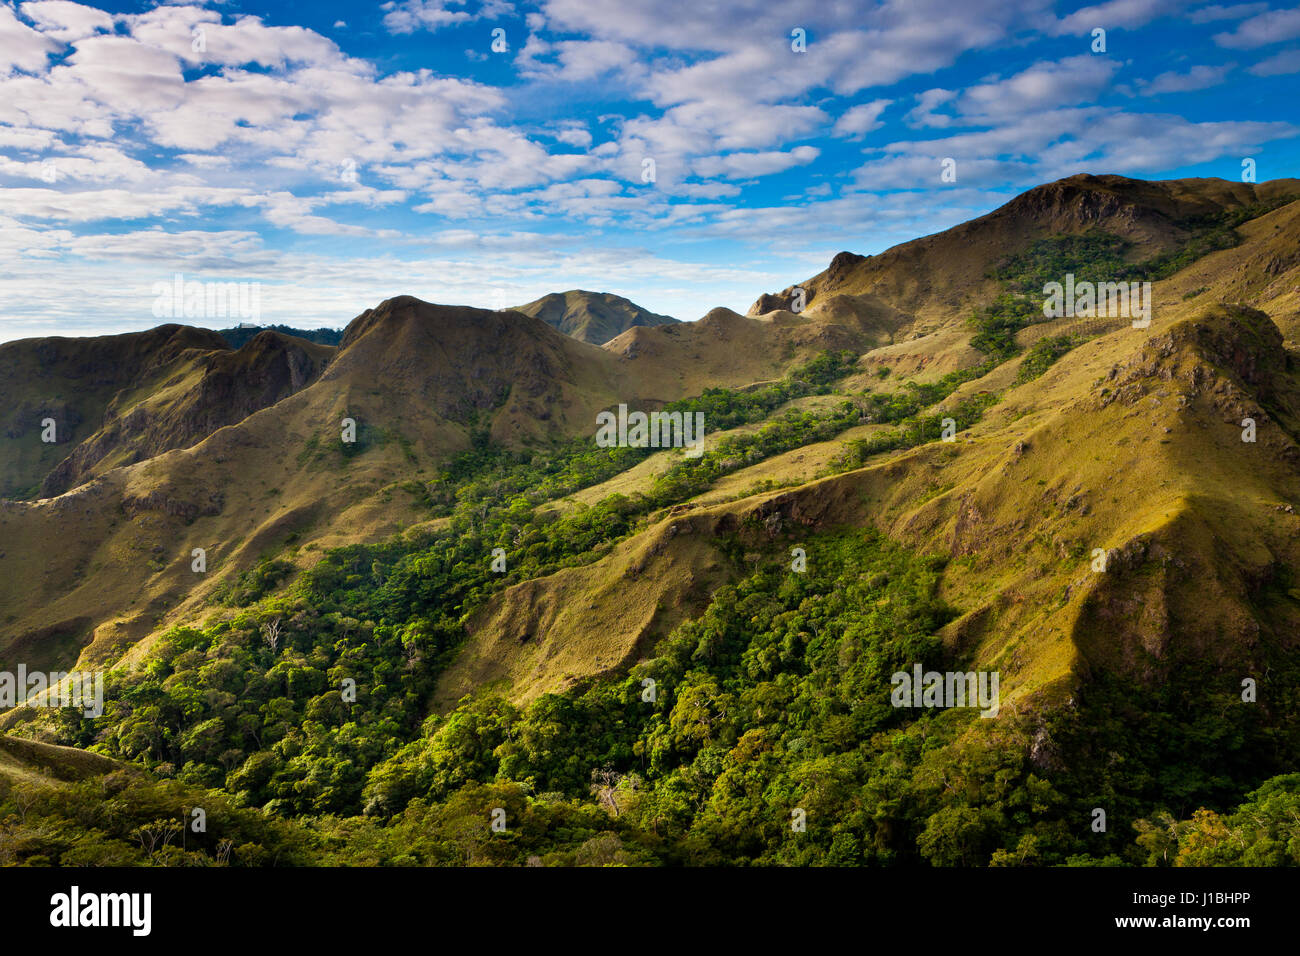 Wunderschöne Panama-Landschaft in den Bergen des Altos de Campana Nationalparks, Provinz Panama, Republik Panama, Mittelamerika. Stockfoto